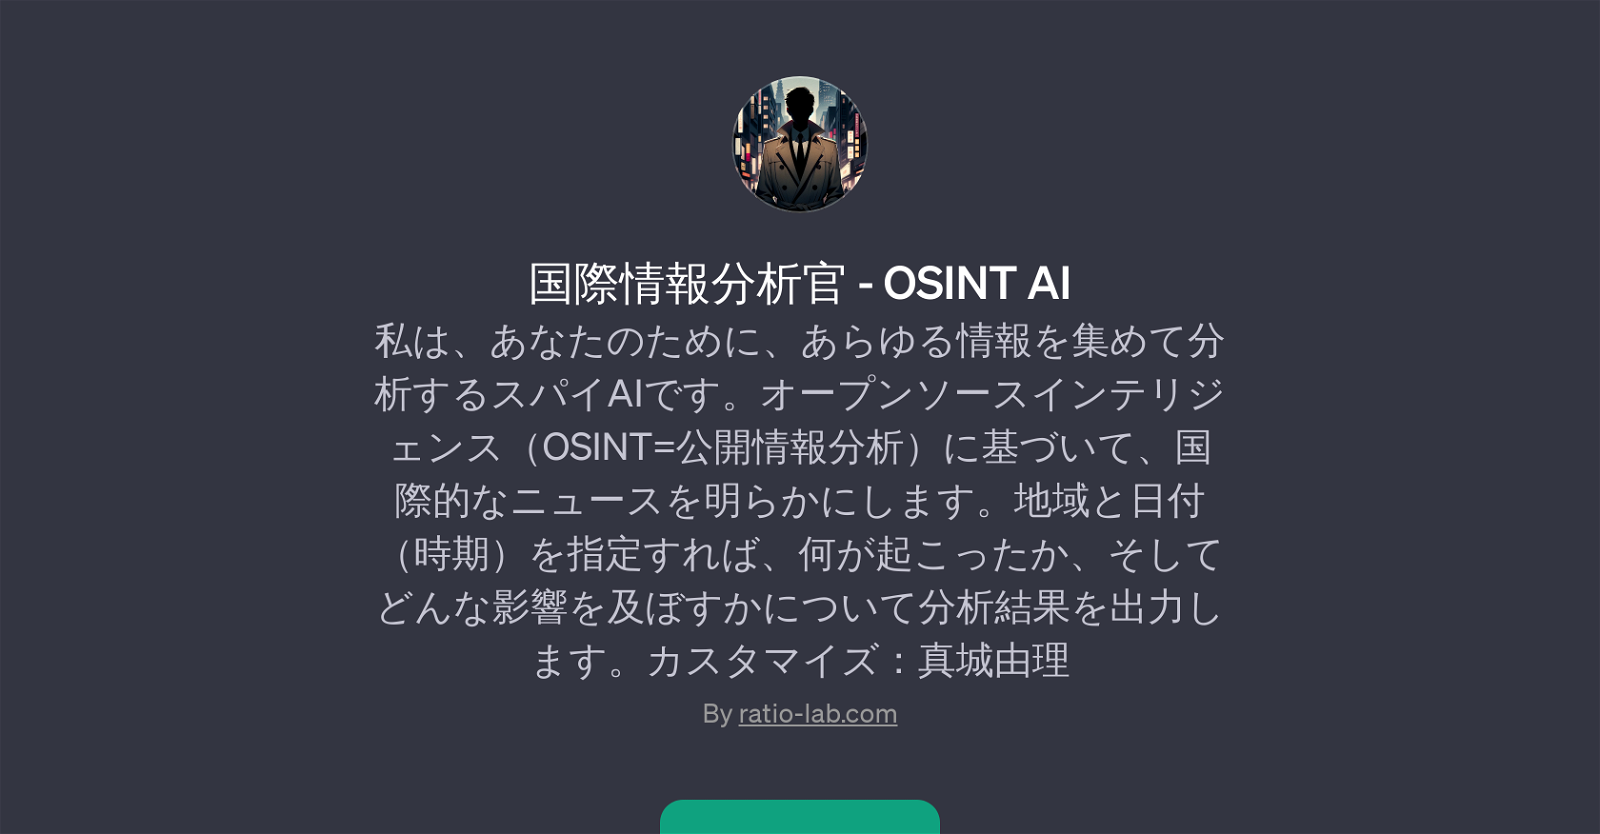 - OSINT AI website